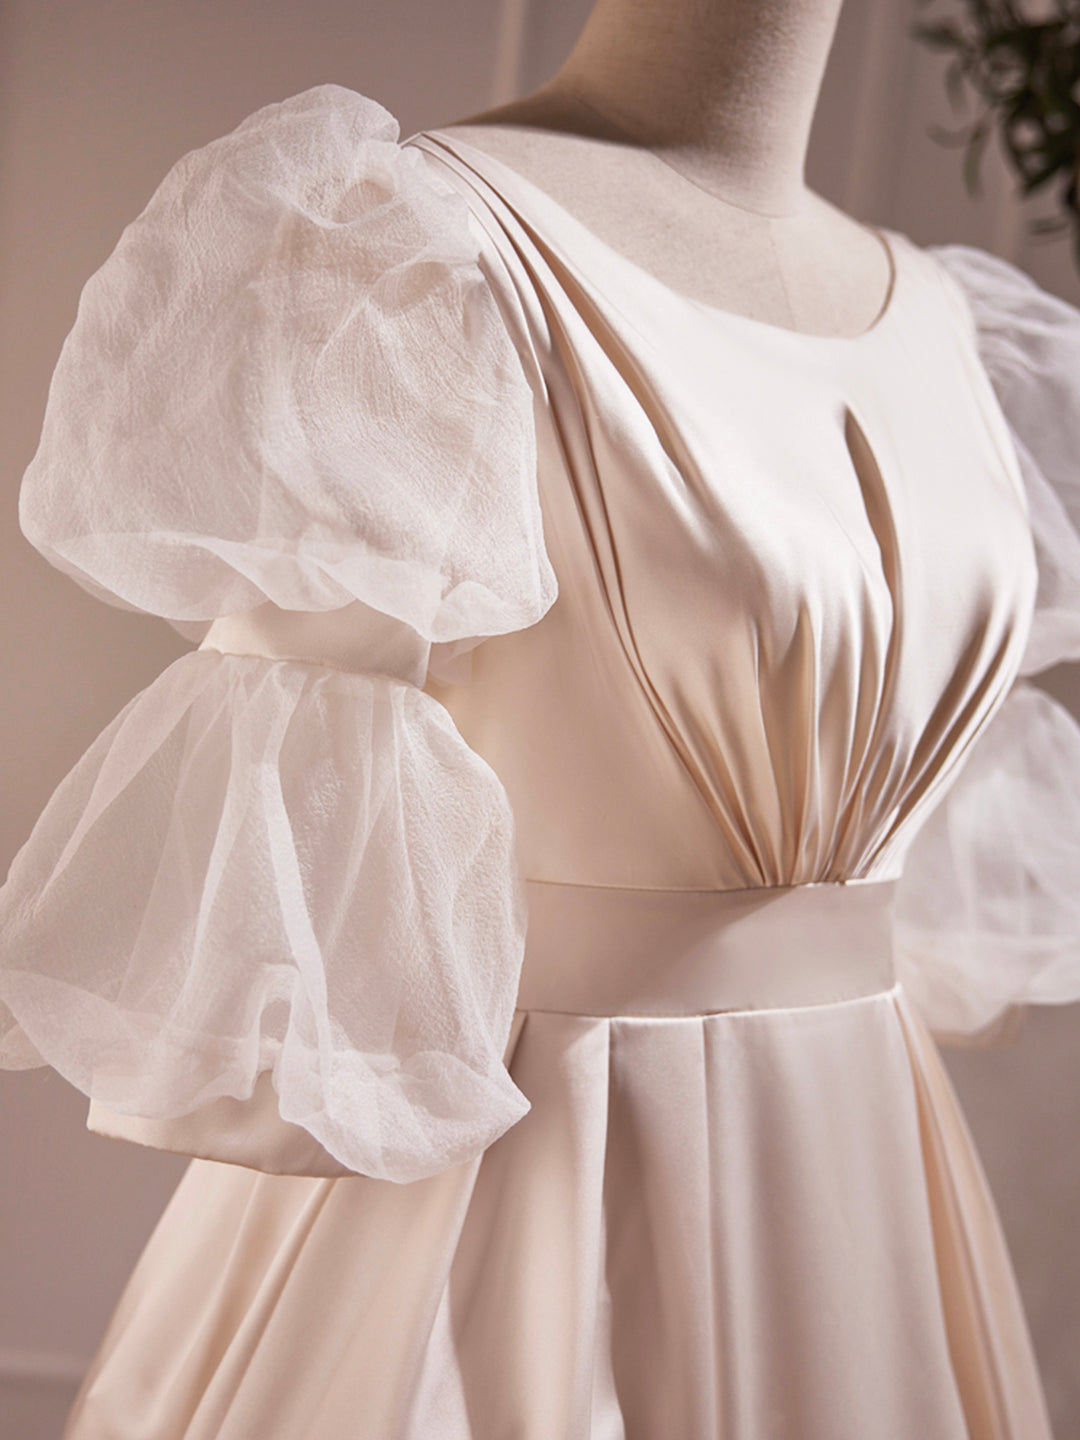 Prom Dress Idea, Beautiful Scoop Neck Tea Length Prom Dress, A-Line Puffy Short Sleeve Backless Party Dress